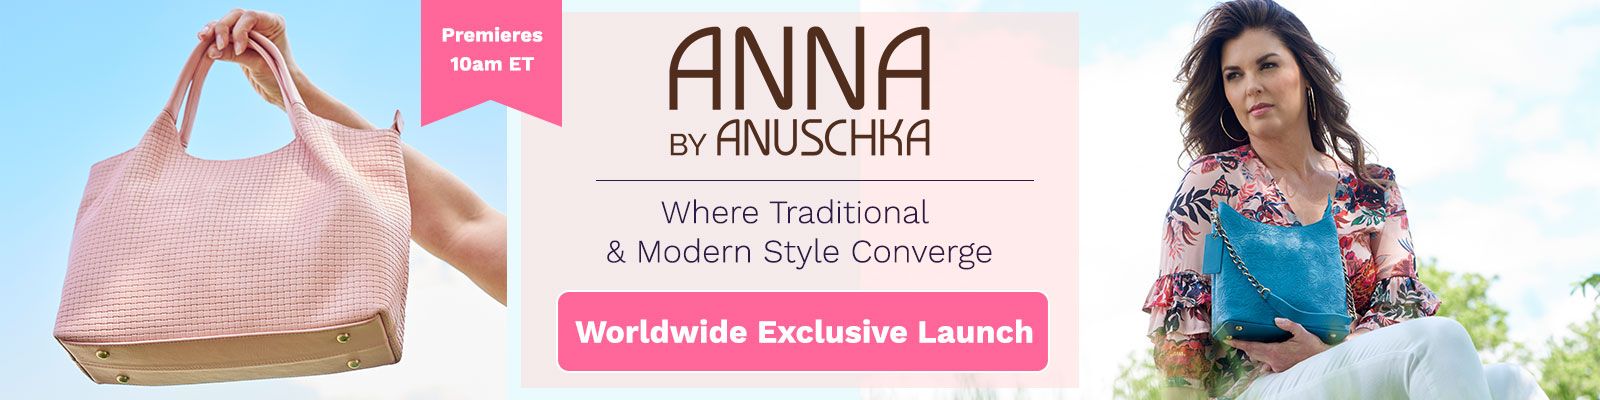 Anna by Anuschka Worldwide Exclusive Launch  722-823, 722-829